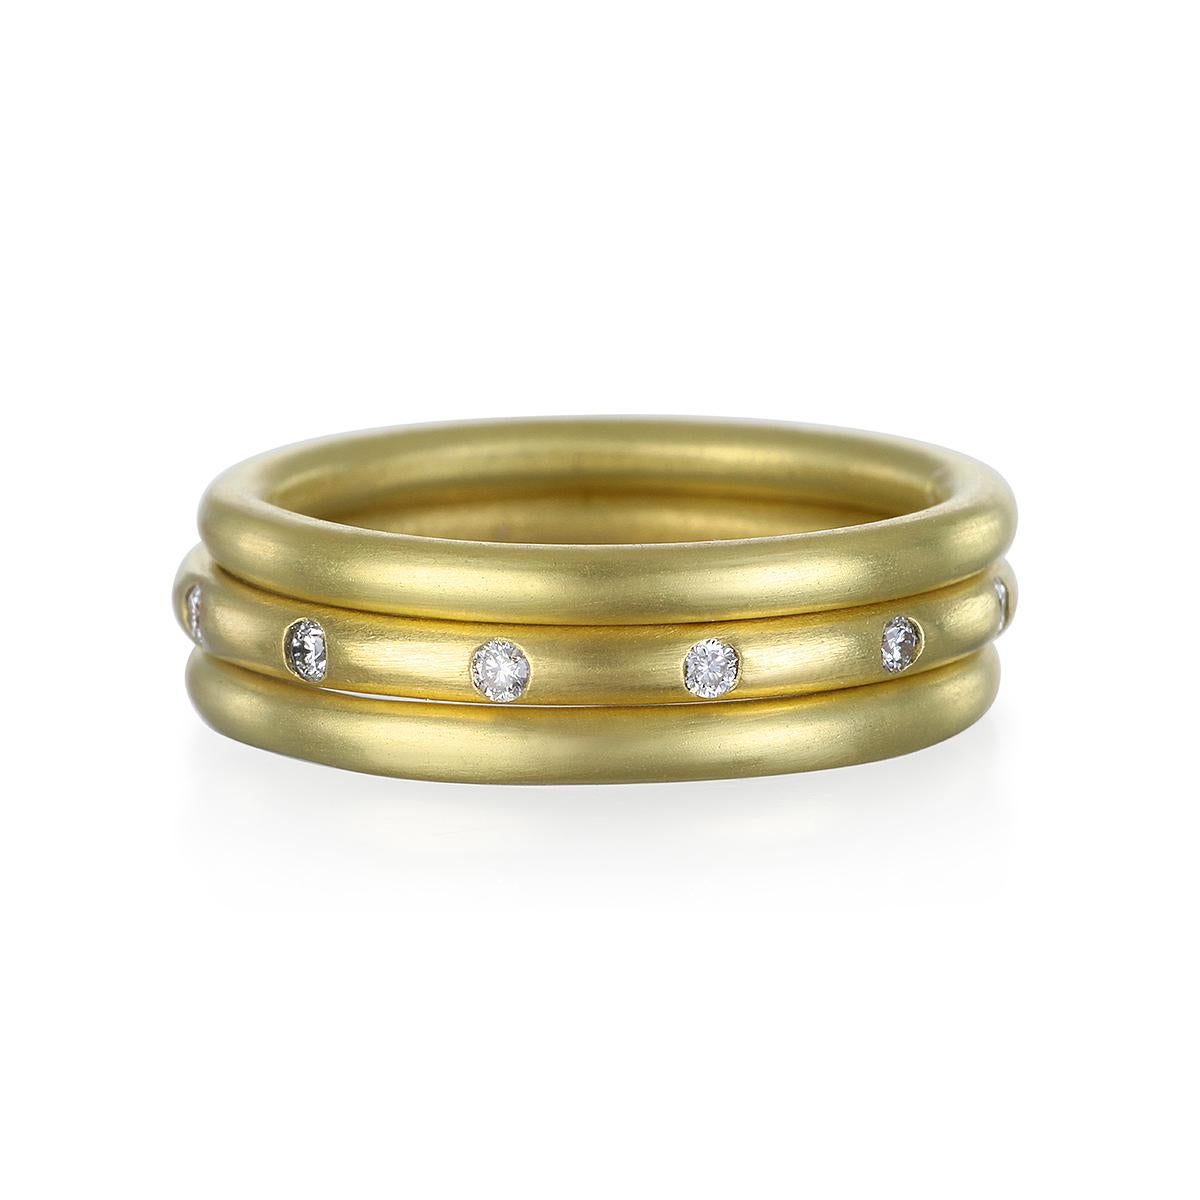 Contemporary Faye Kim 18k Gold Round Band Ring